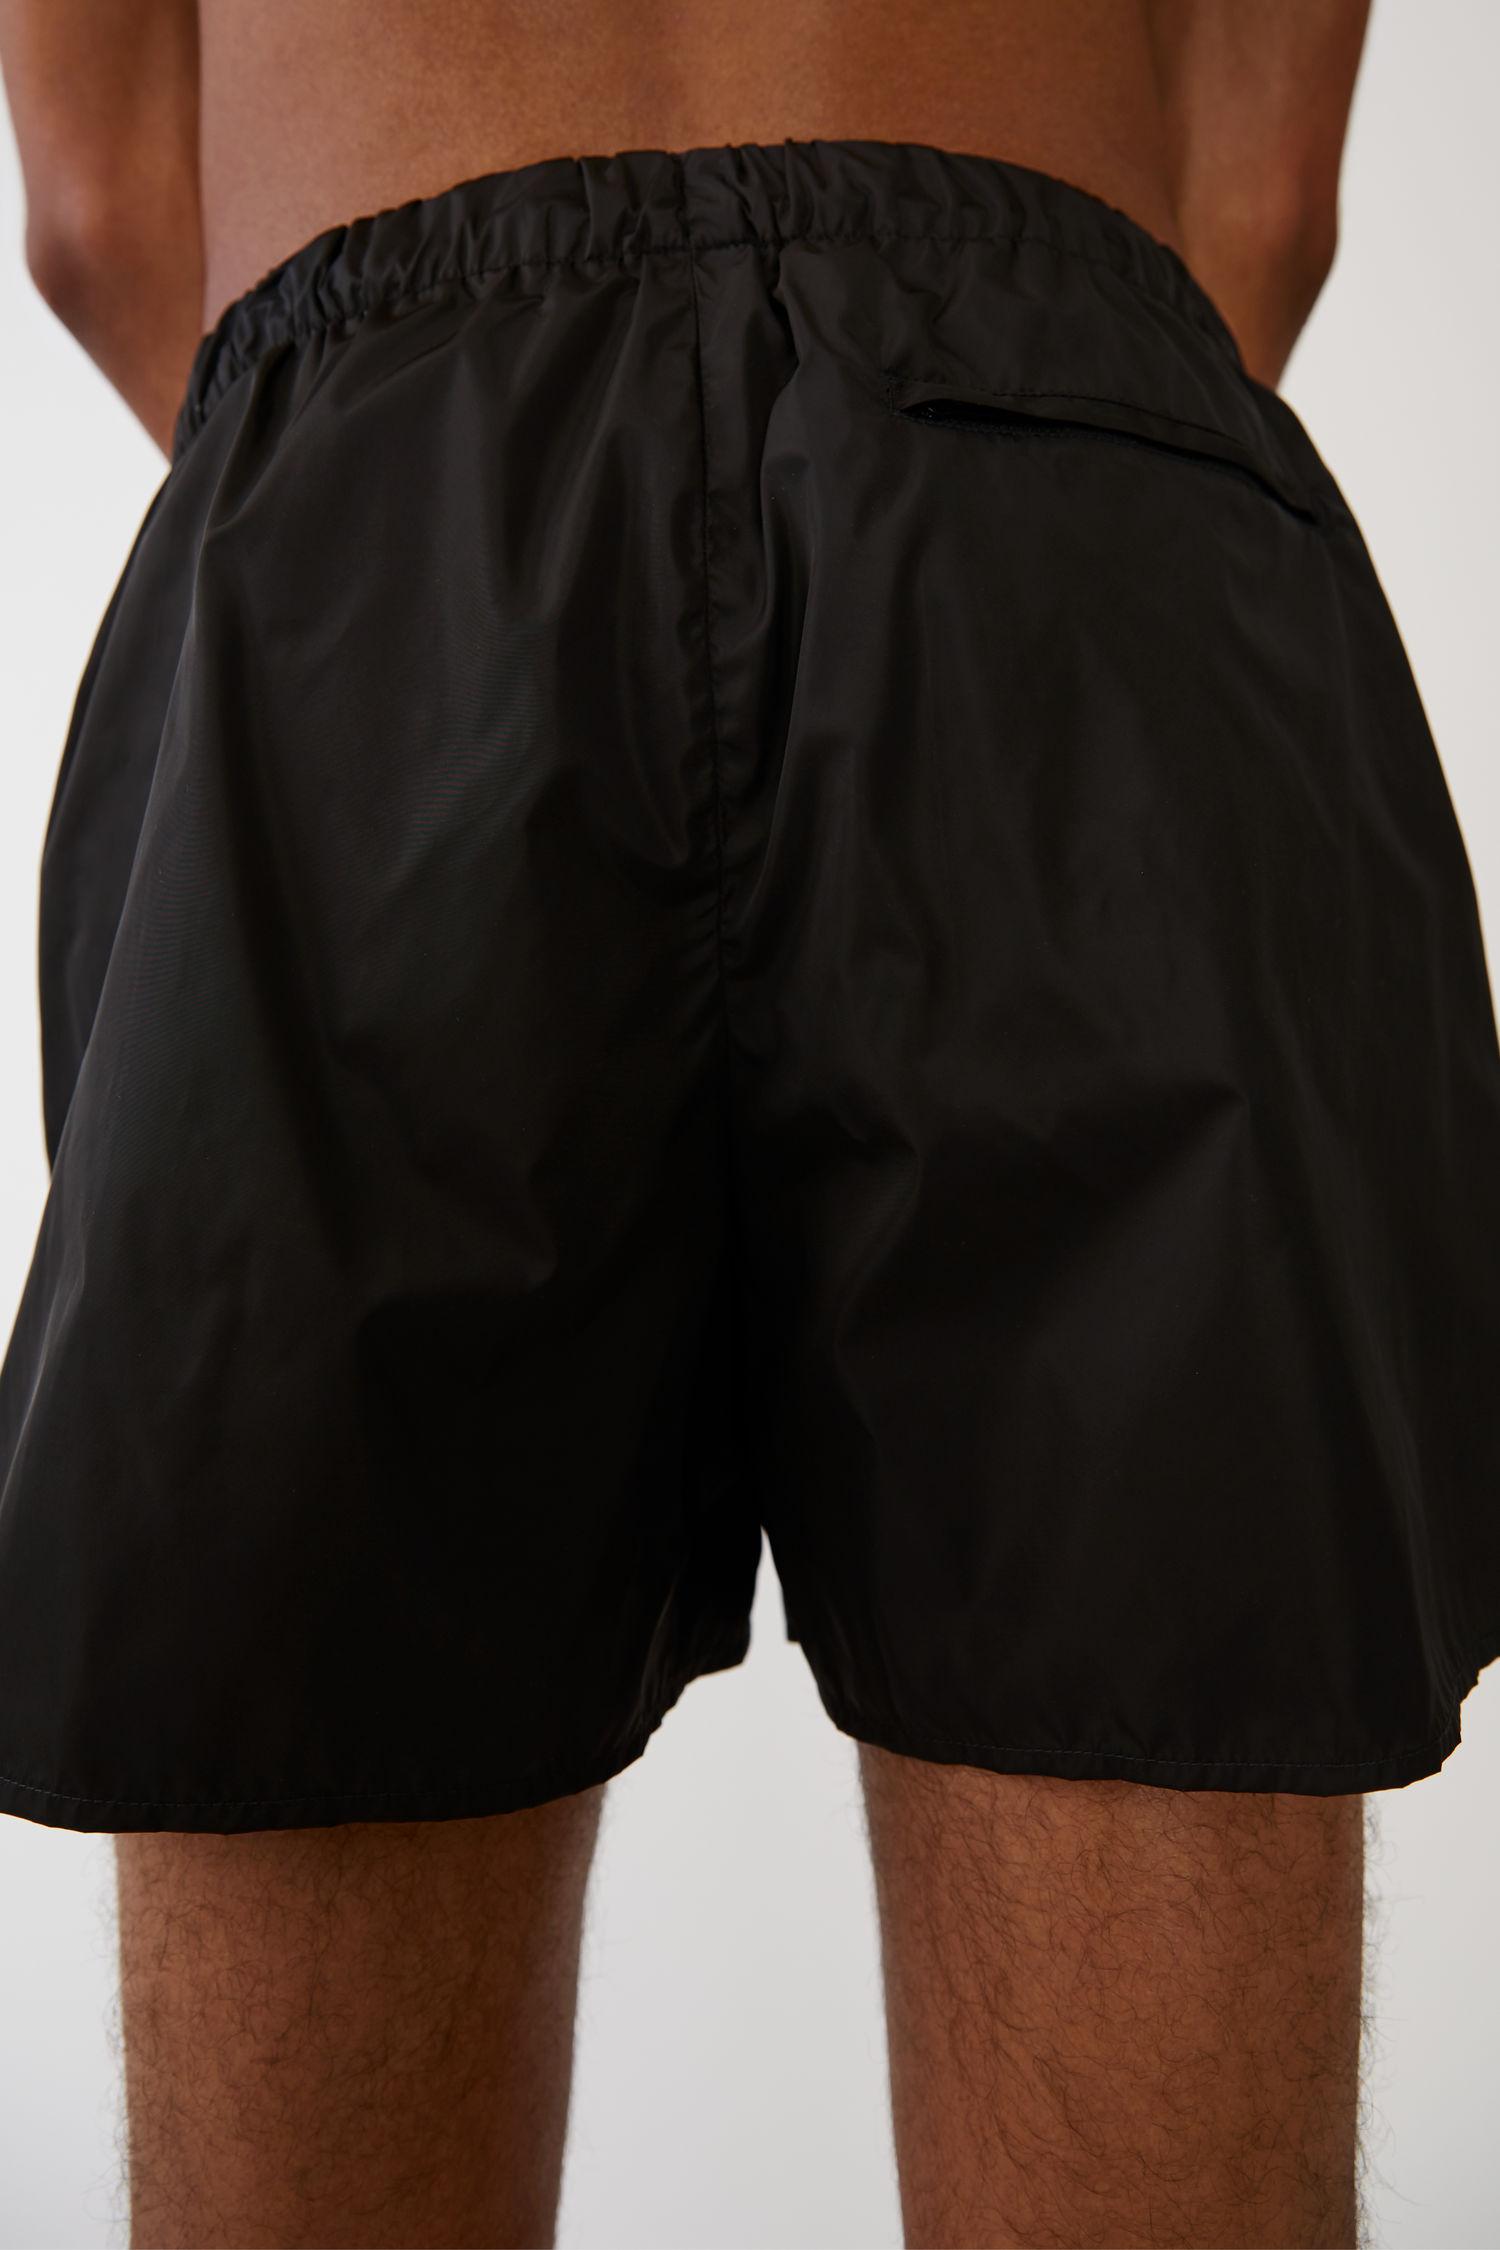 Acne Studios Synthetic Nylon Swim Shorts black for Men - Lyst